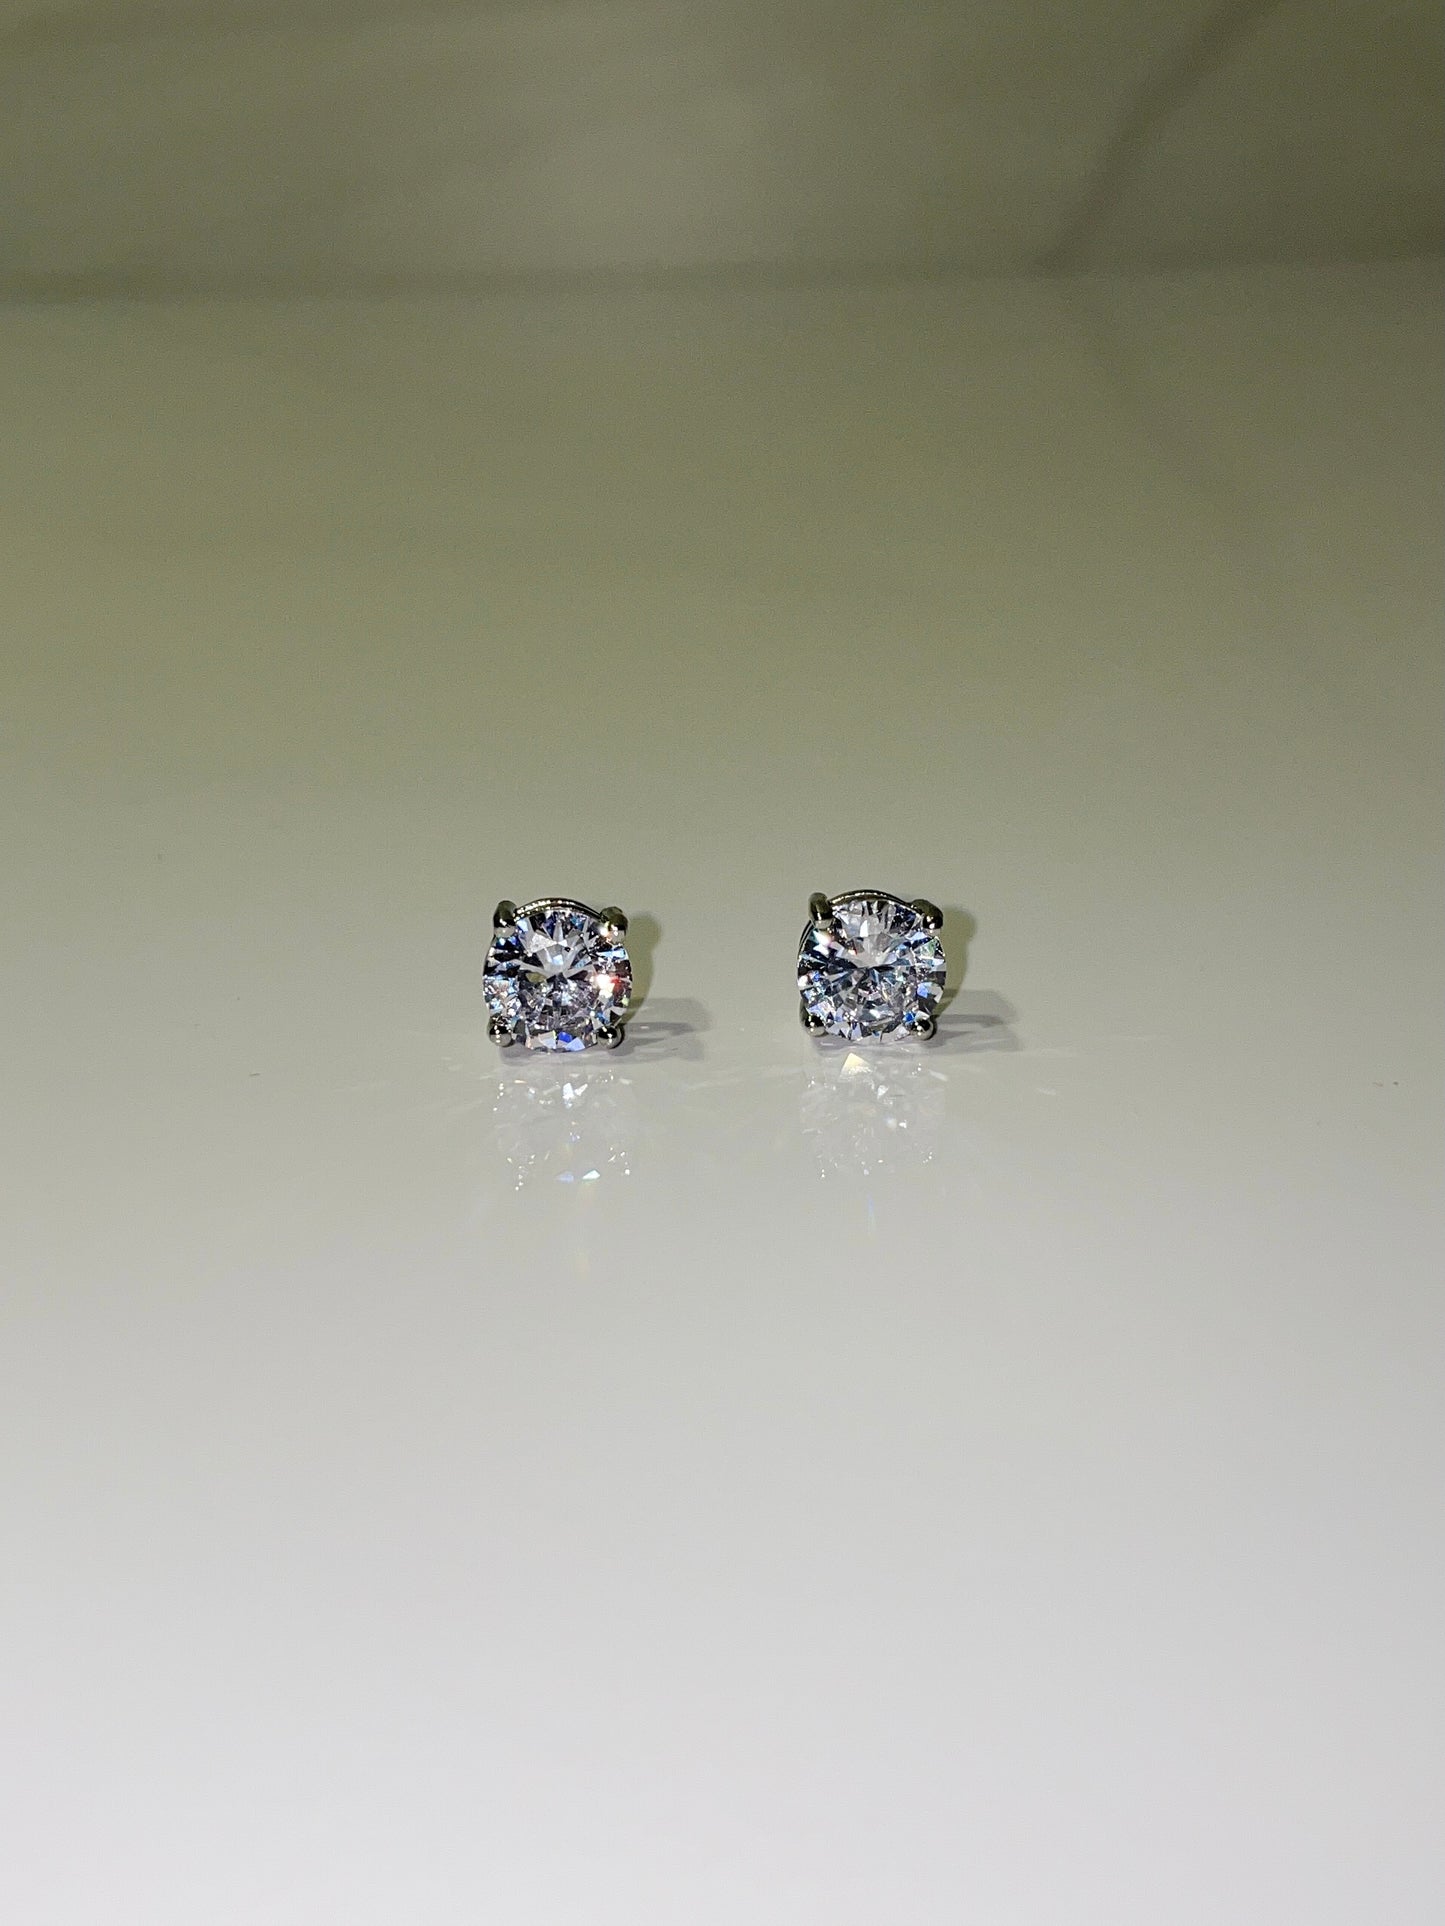 8mm cubic zirconia diamond stud earrings with screwback